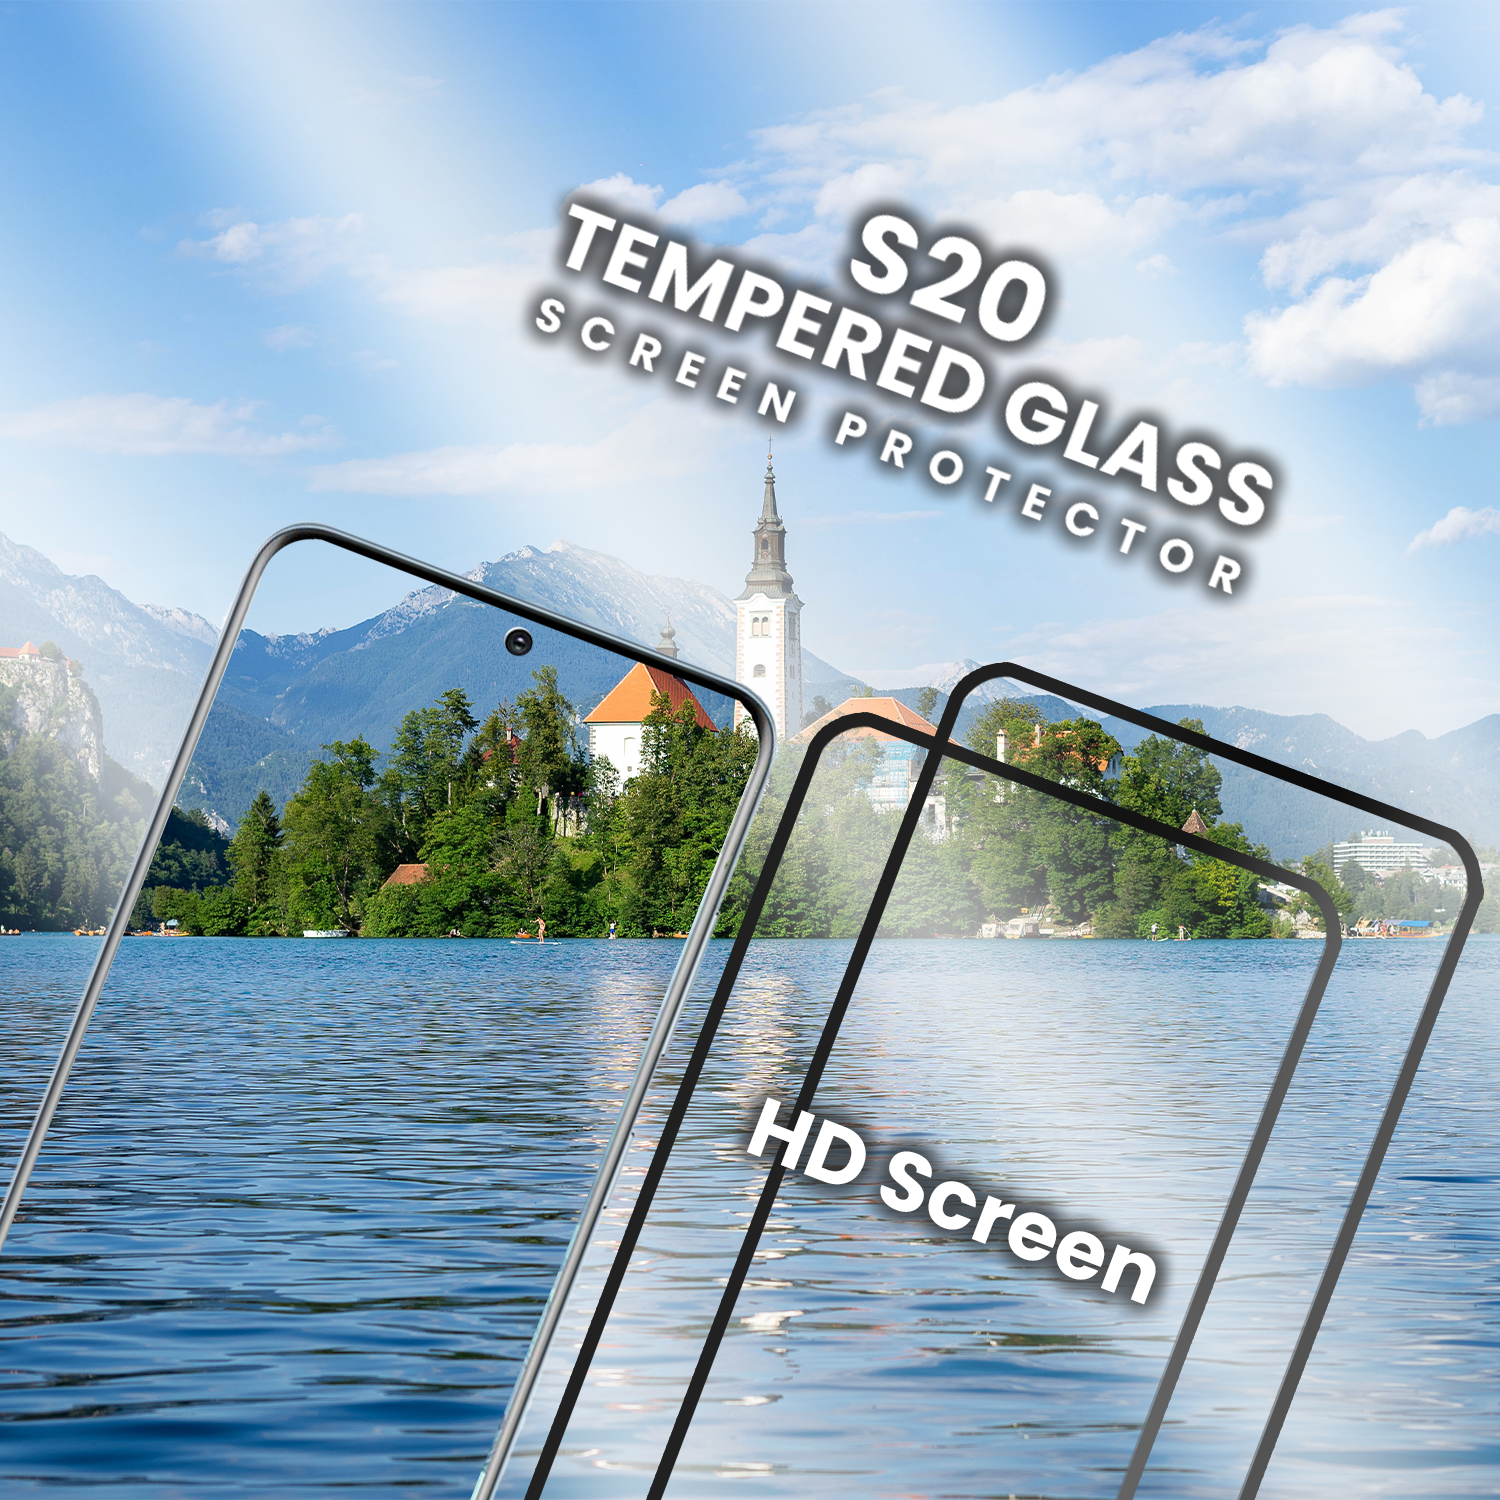 2-PACK Samsung S20 - 9H Härdat Glass - Super Kvalitet 3D skärmskydd